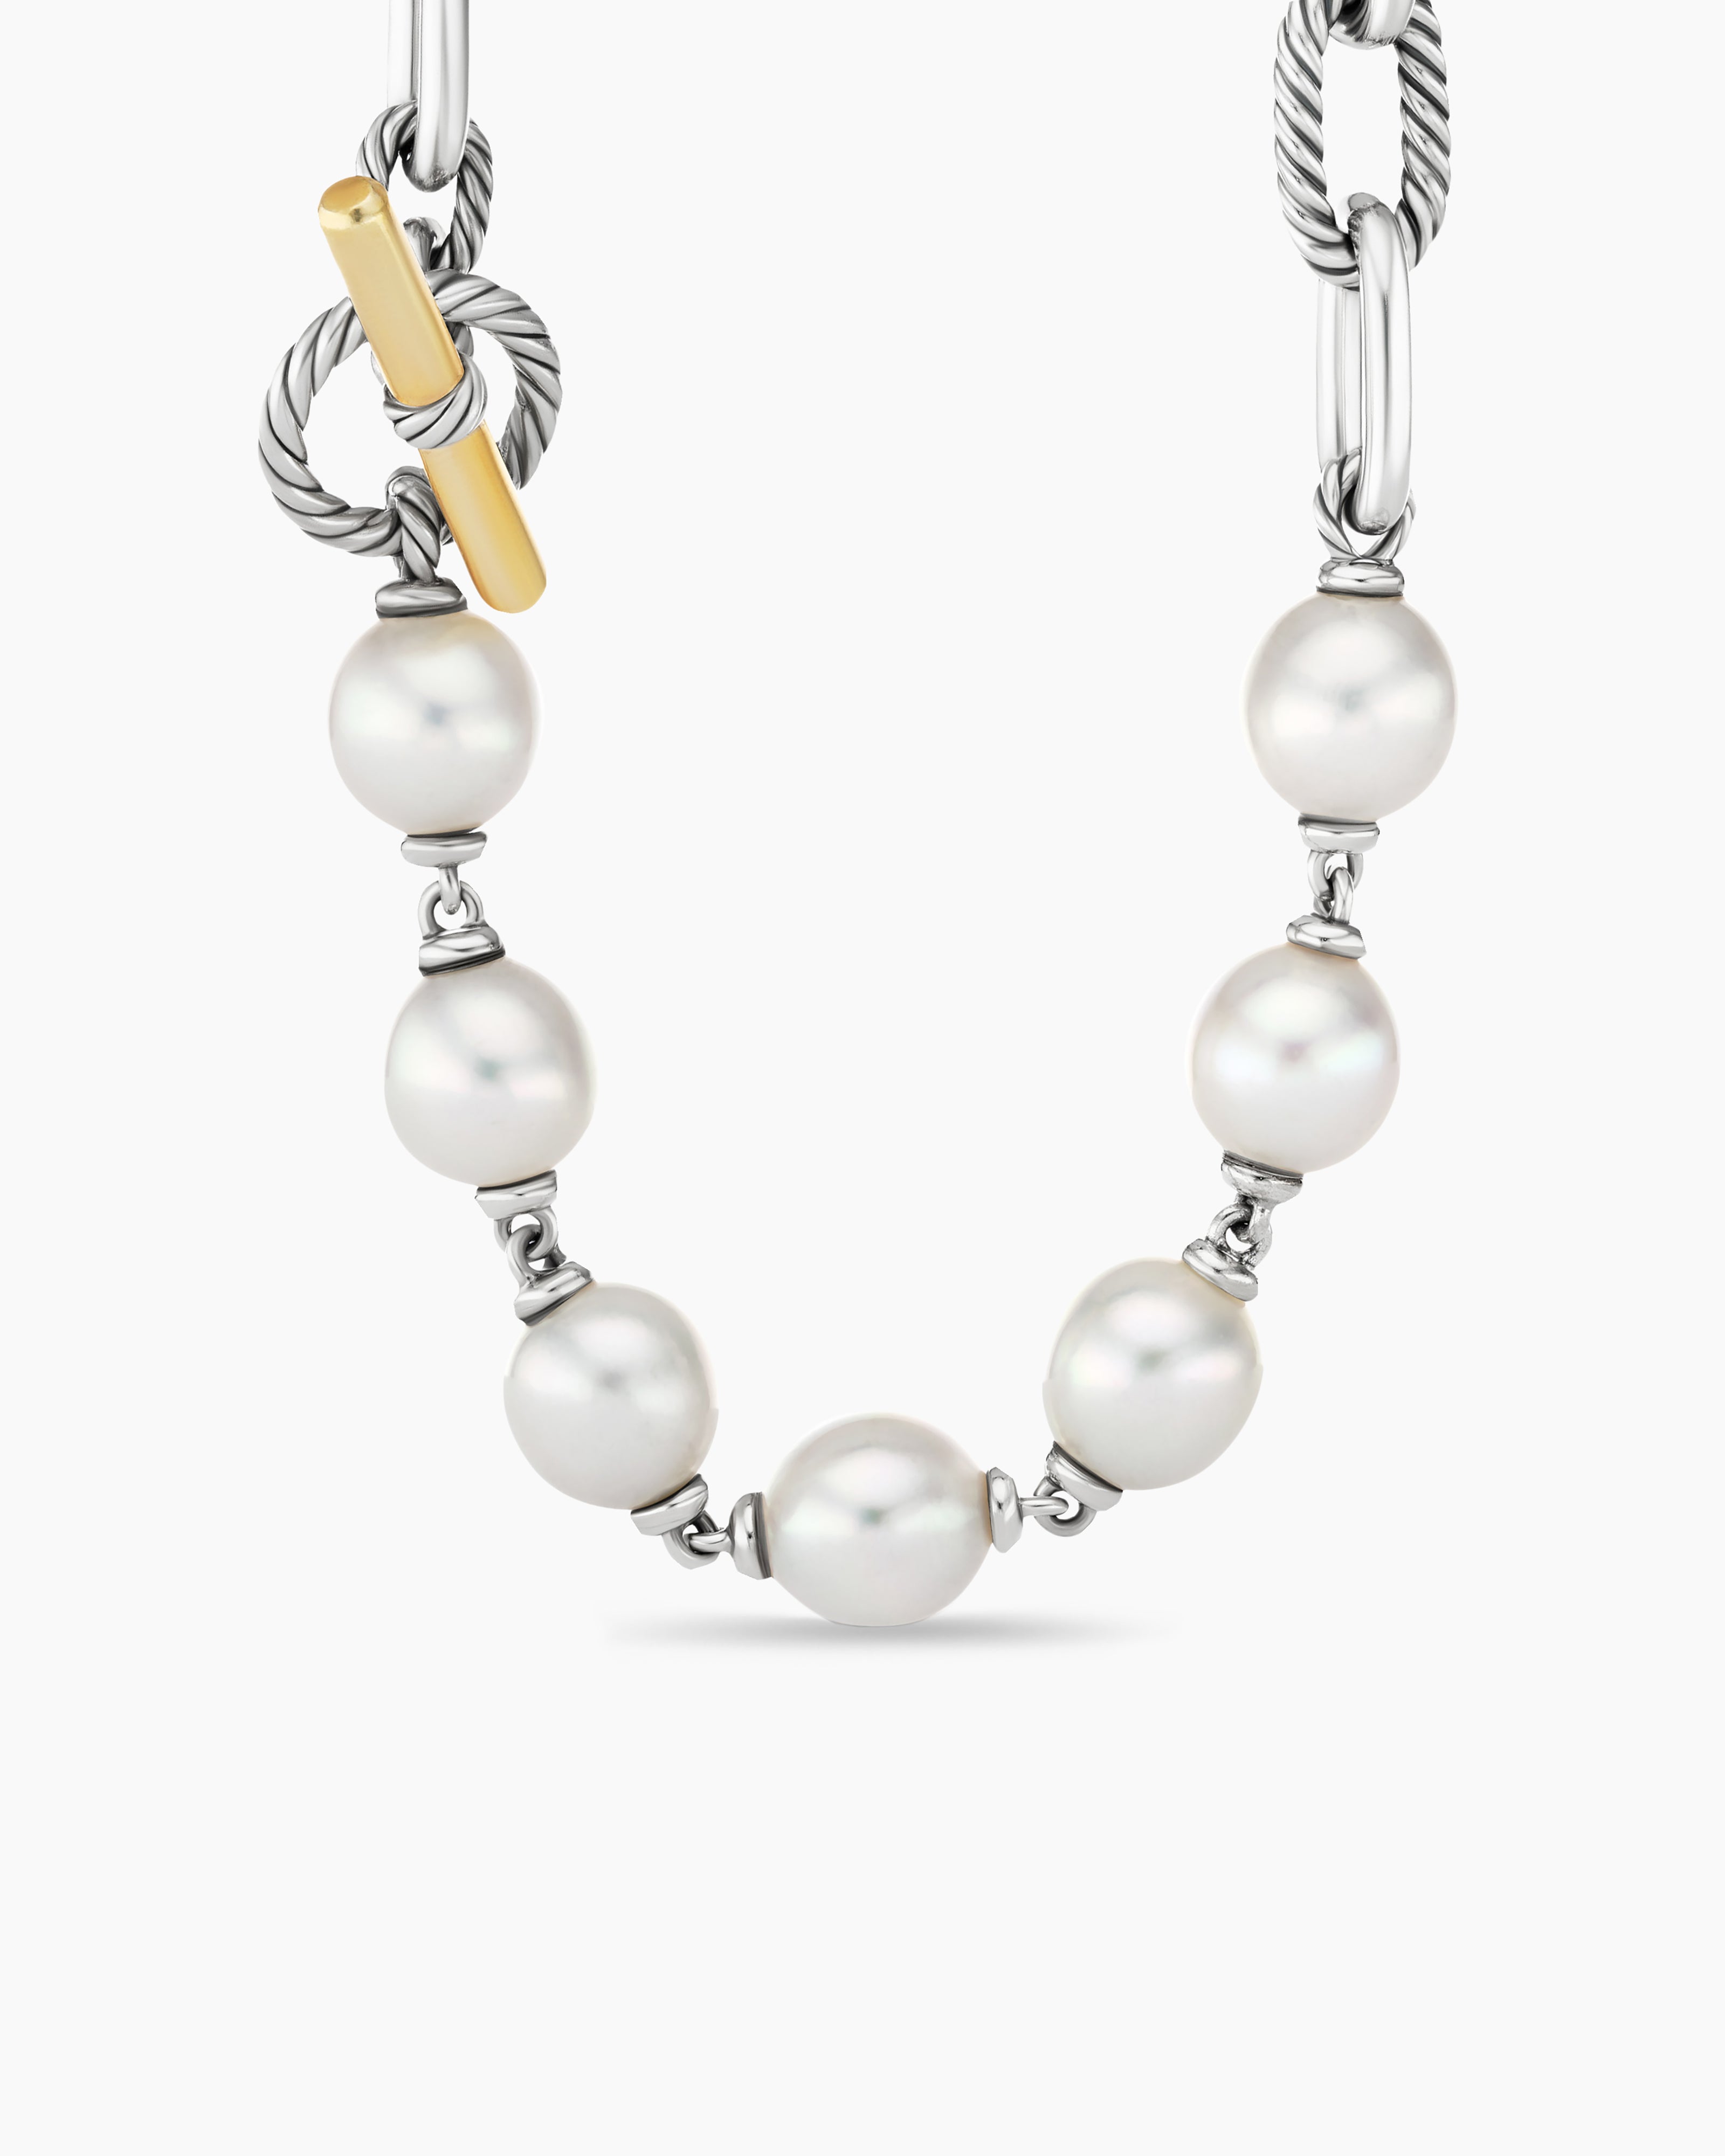 David Yurman Madison Pearl Chain & 18K Gold Necklace